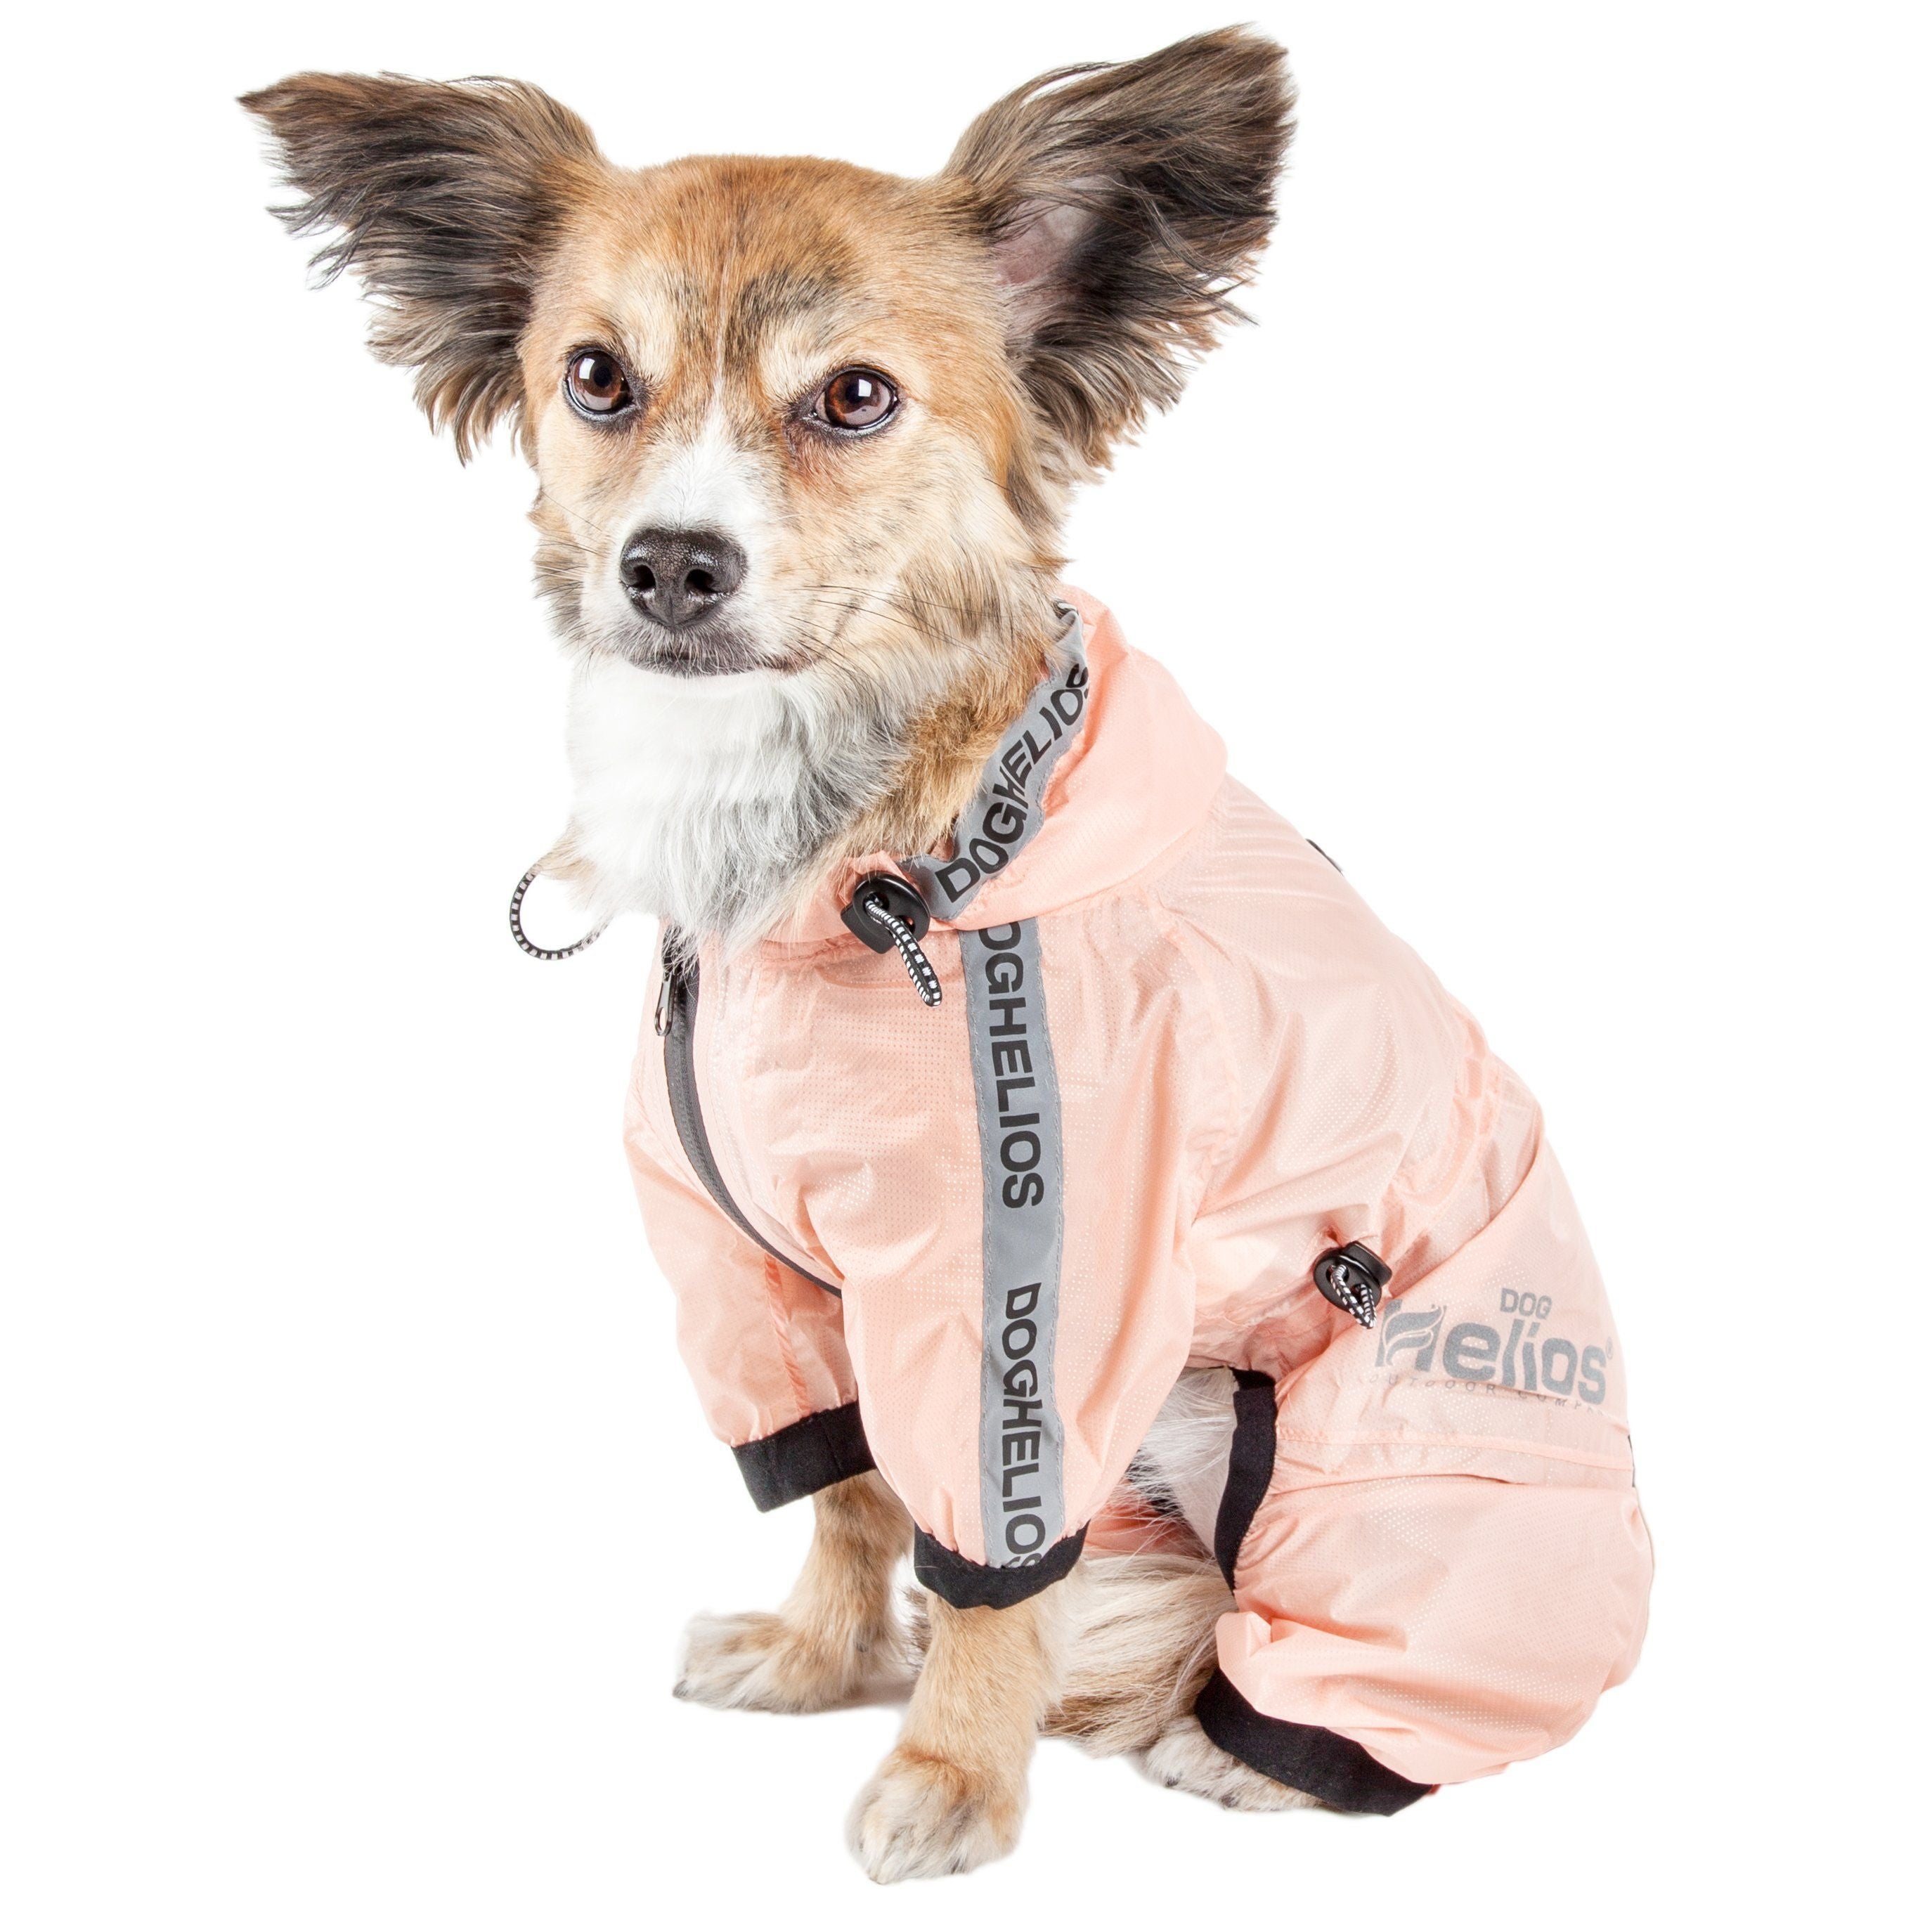 Dog Helios ® 'Torrential Shield' Waterproof and Adjustable Full Body Dog Raincoat  